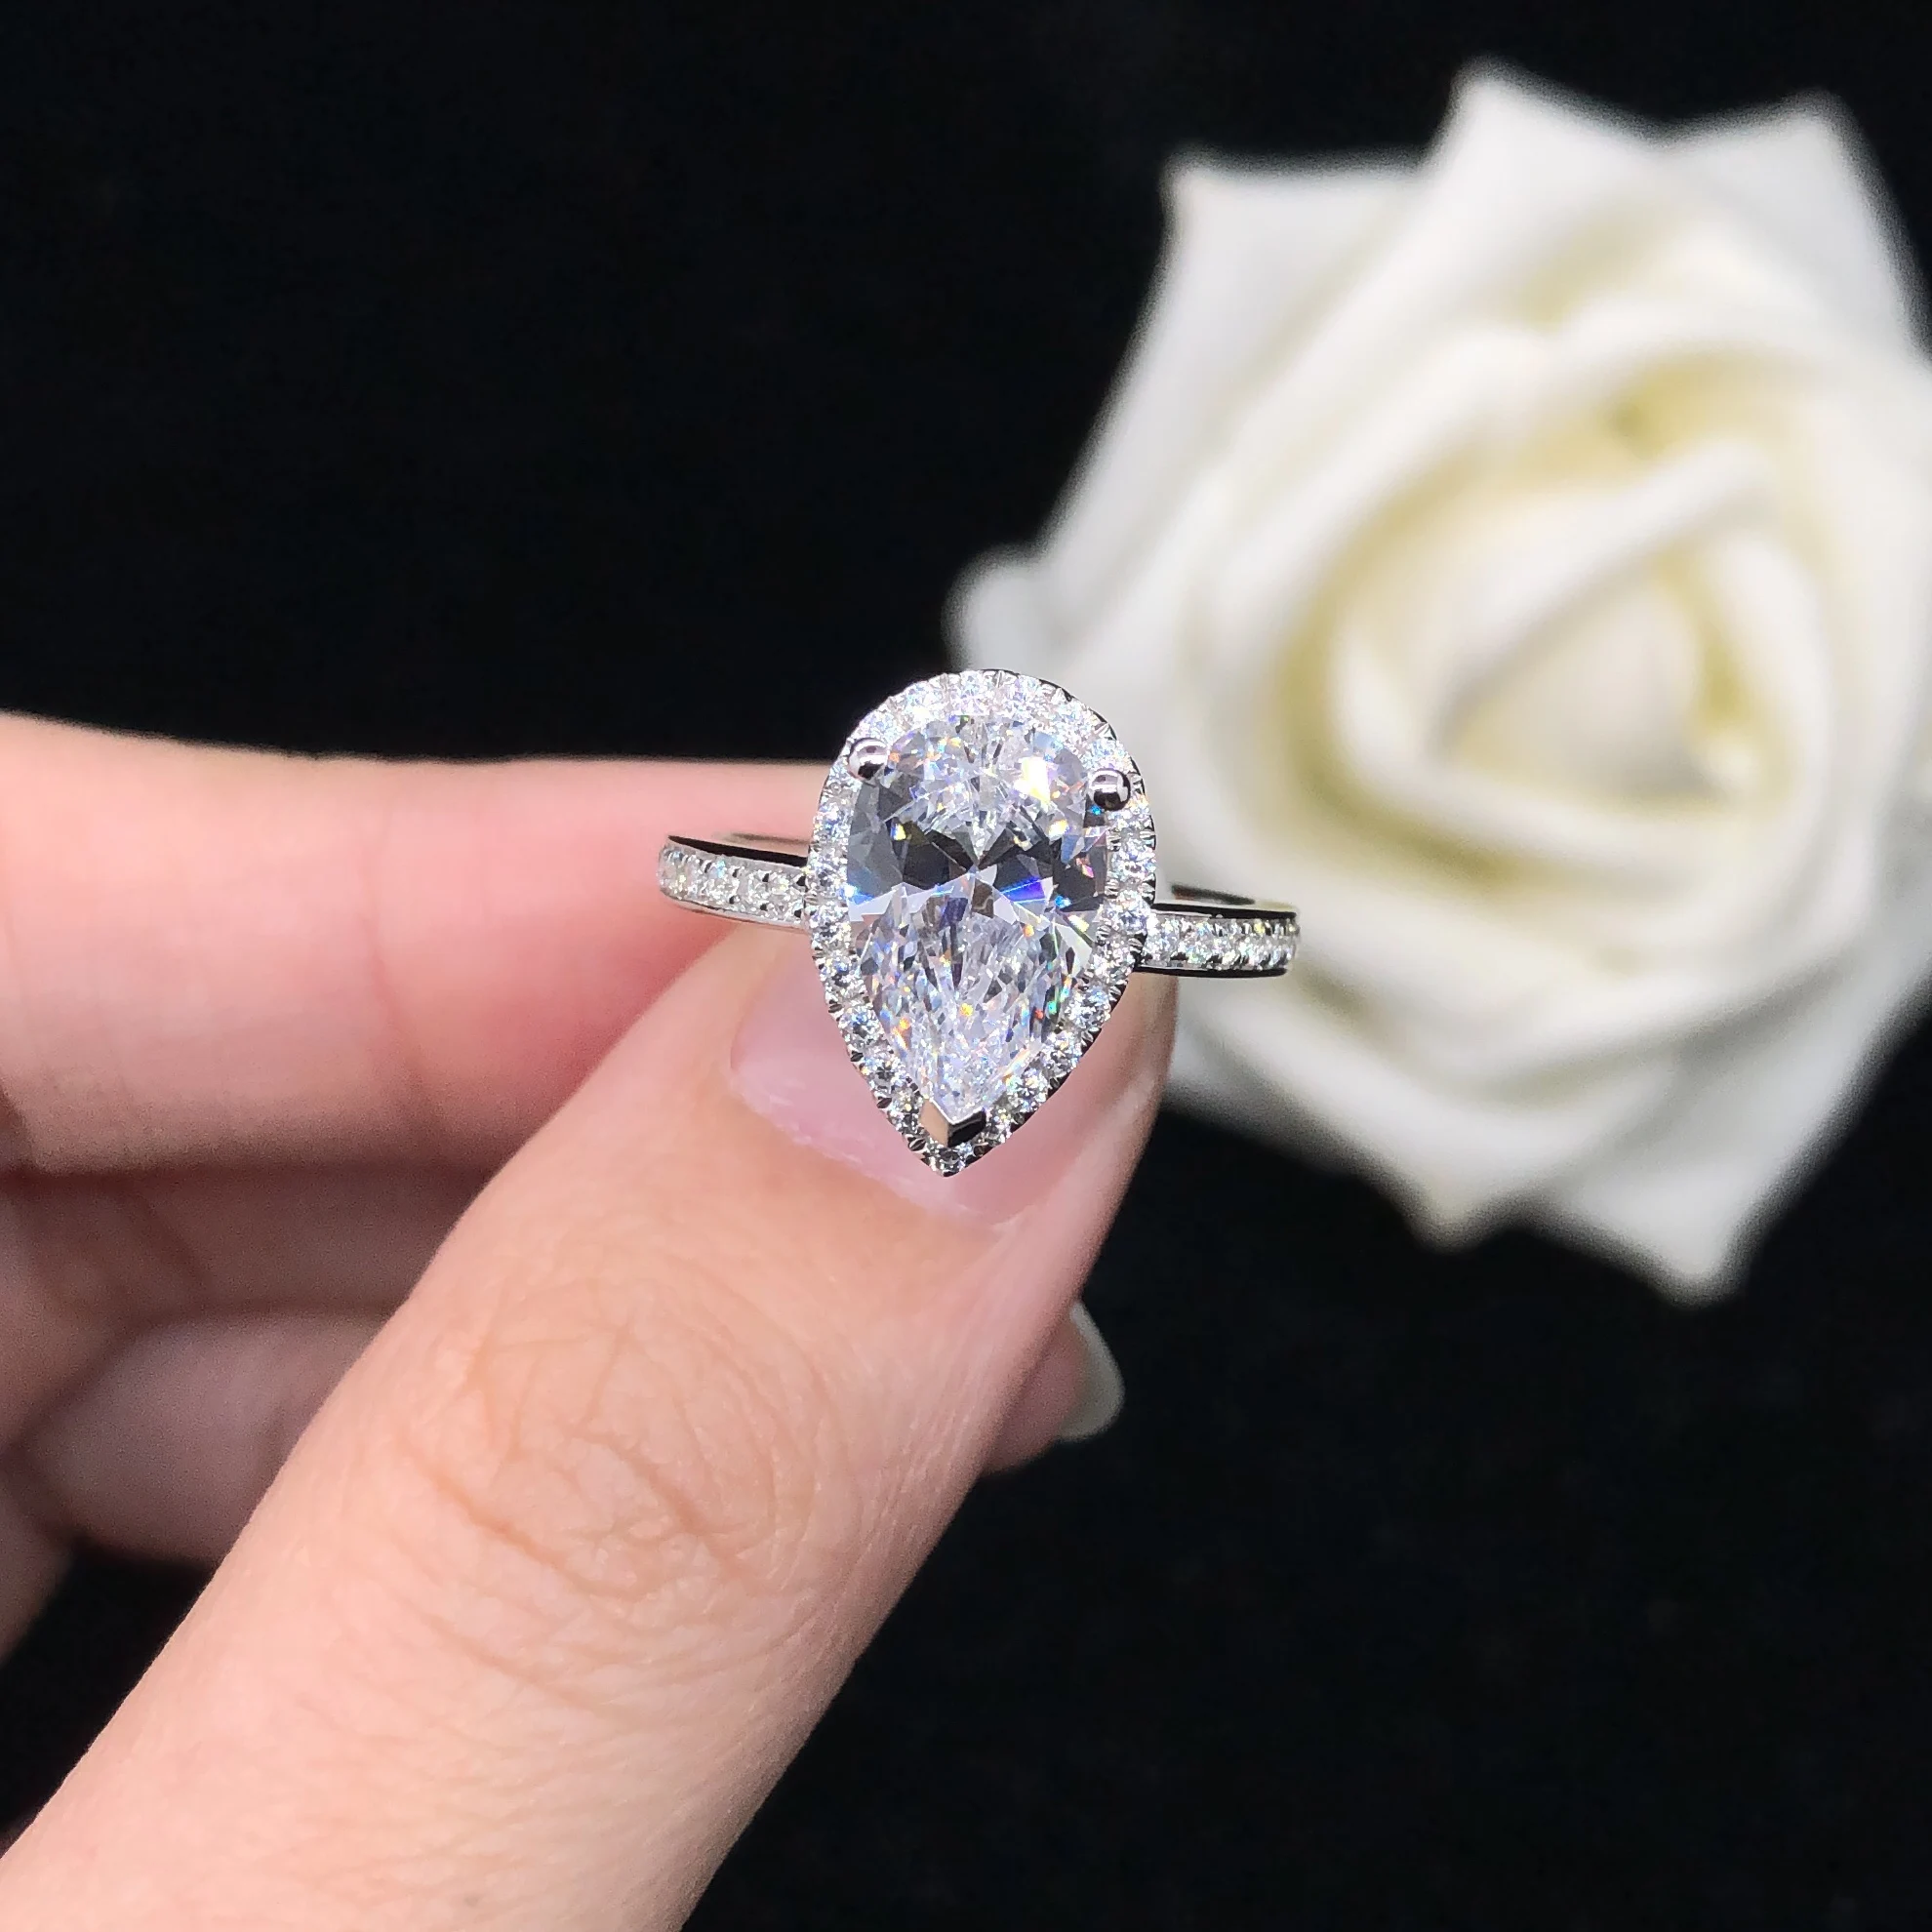 3 Carat Round Cut Diamond Engagement Ring Solid Platinum 950 Wedding Ring Luxury Design Pear Shape Best Jewelry Gift